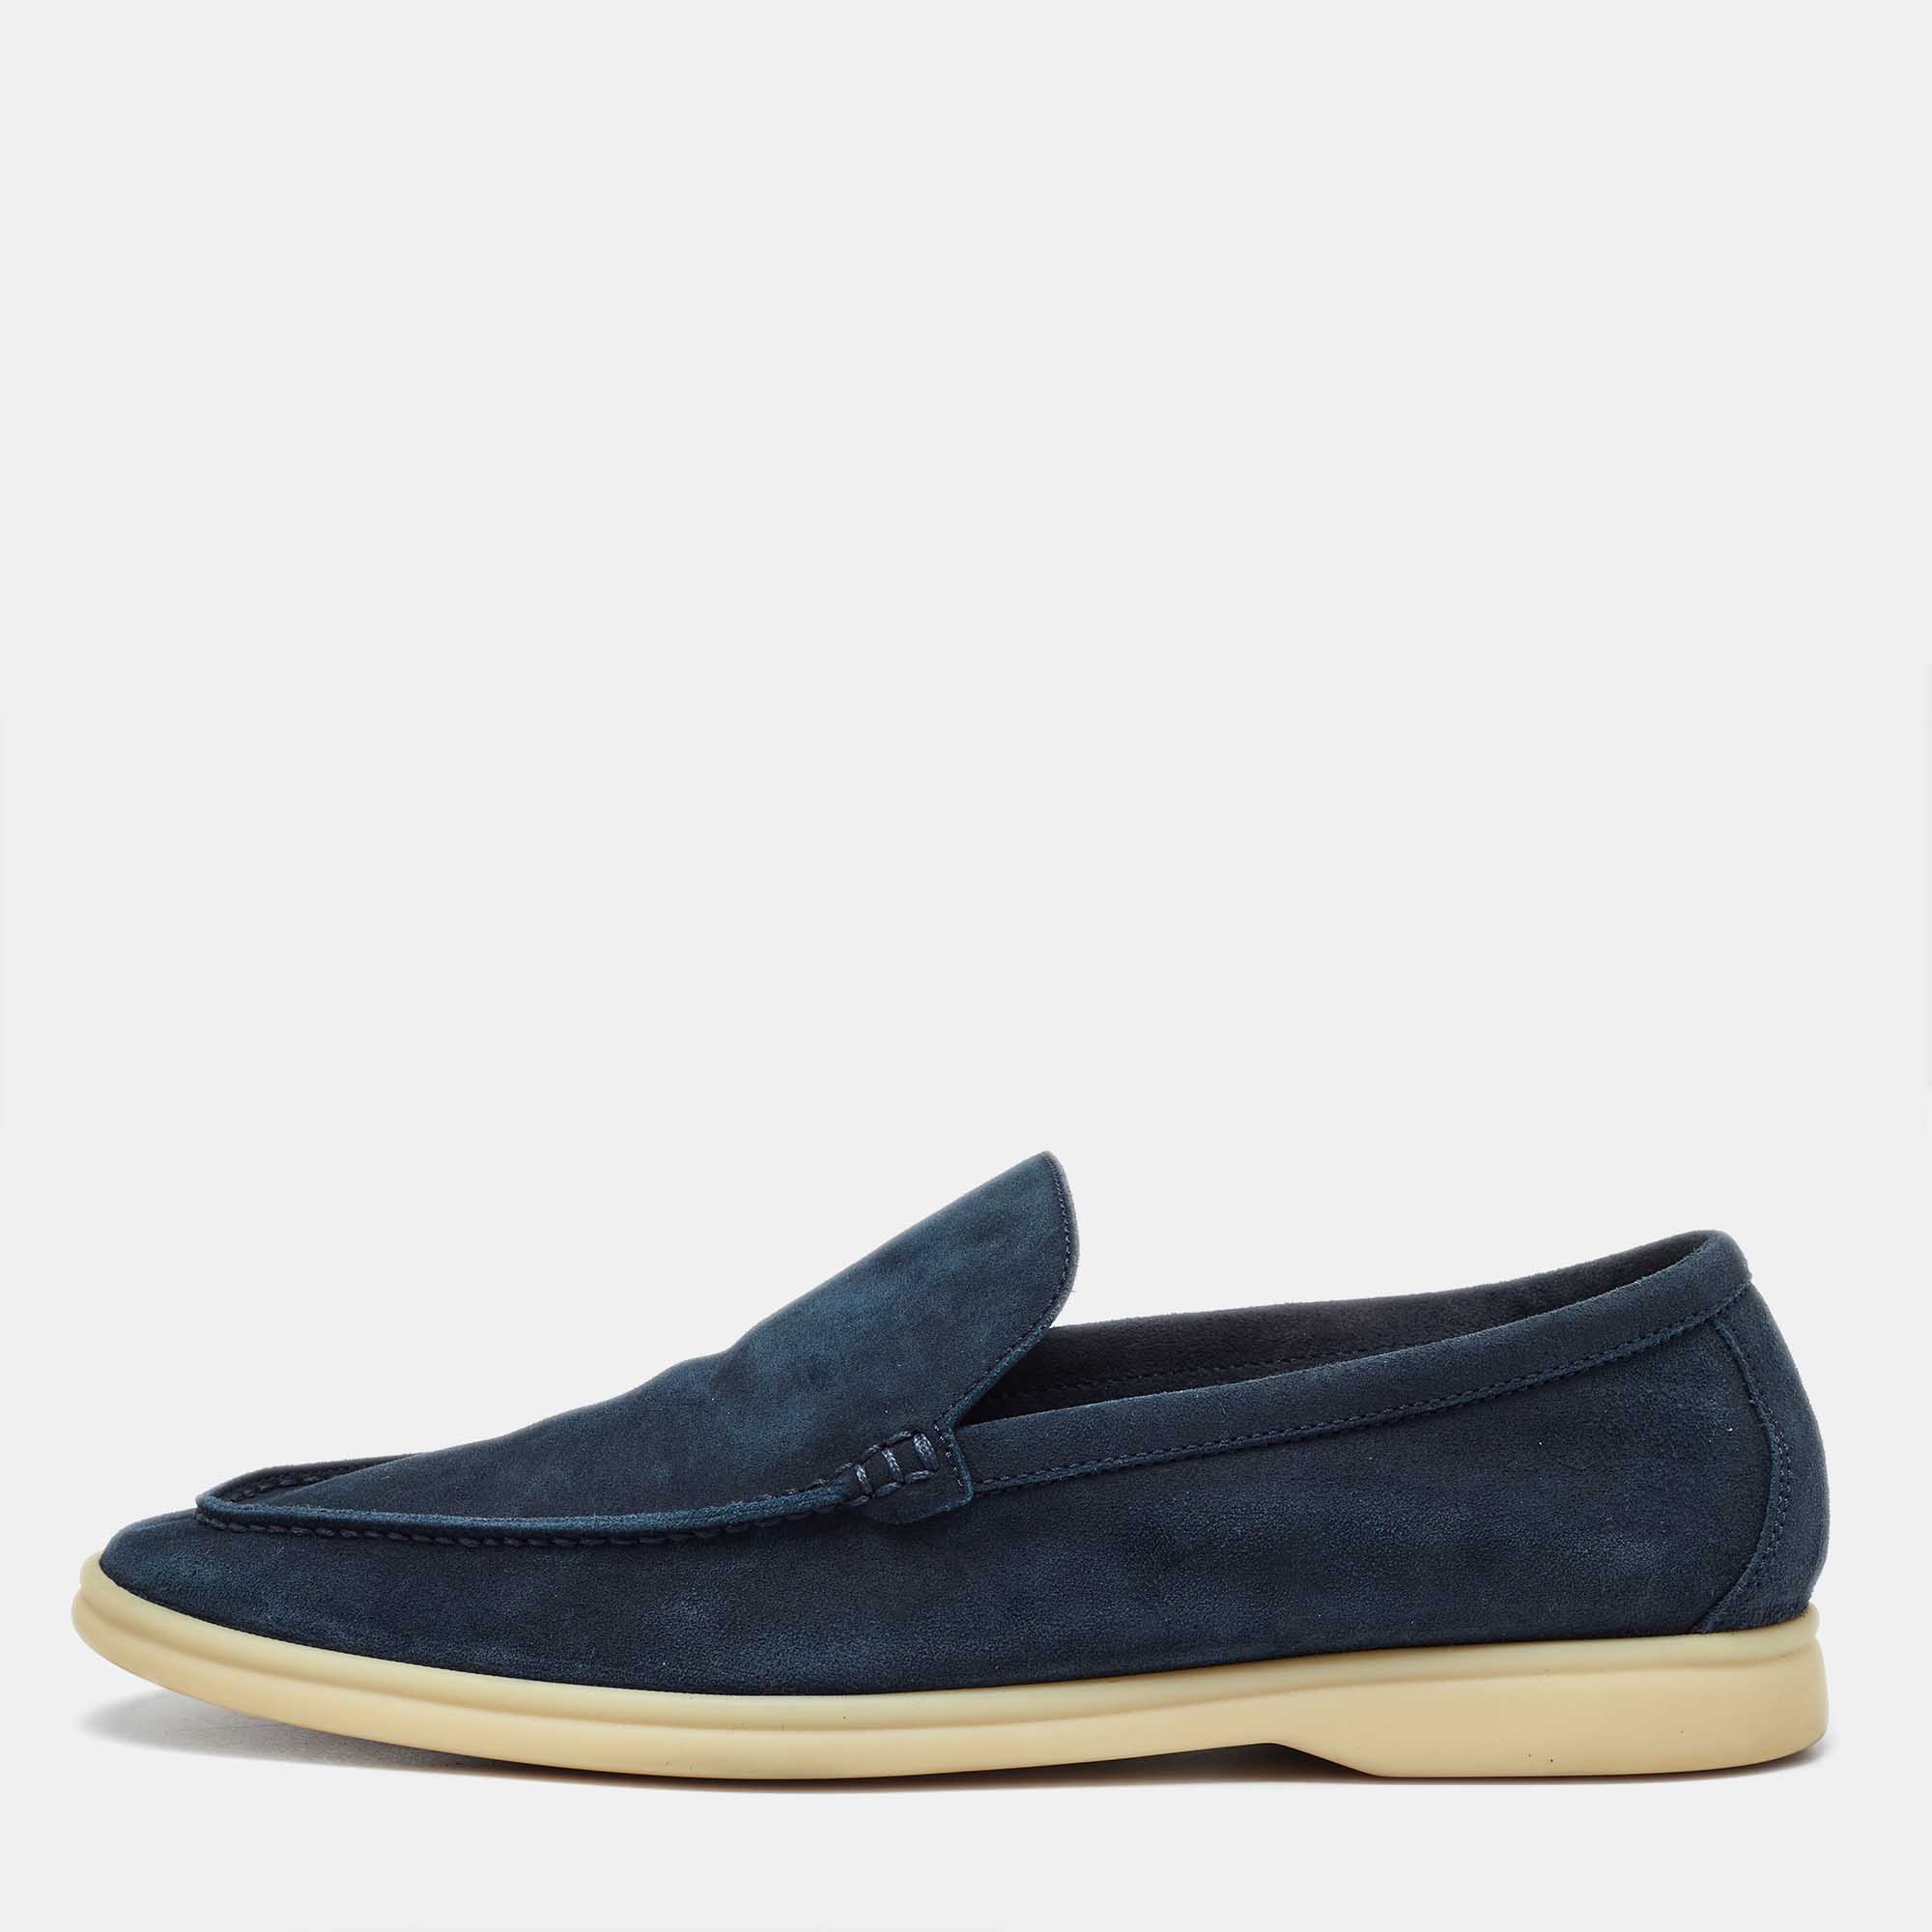 Loro piana blue suede summer walk slip on loafers size 41.5